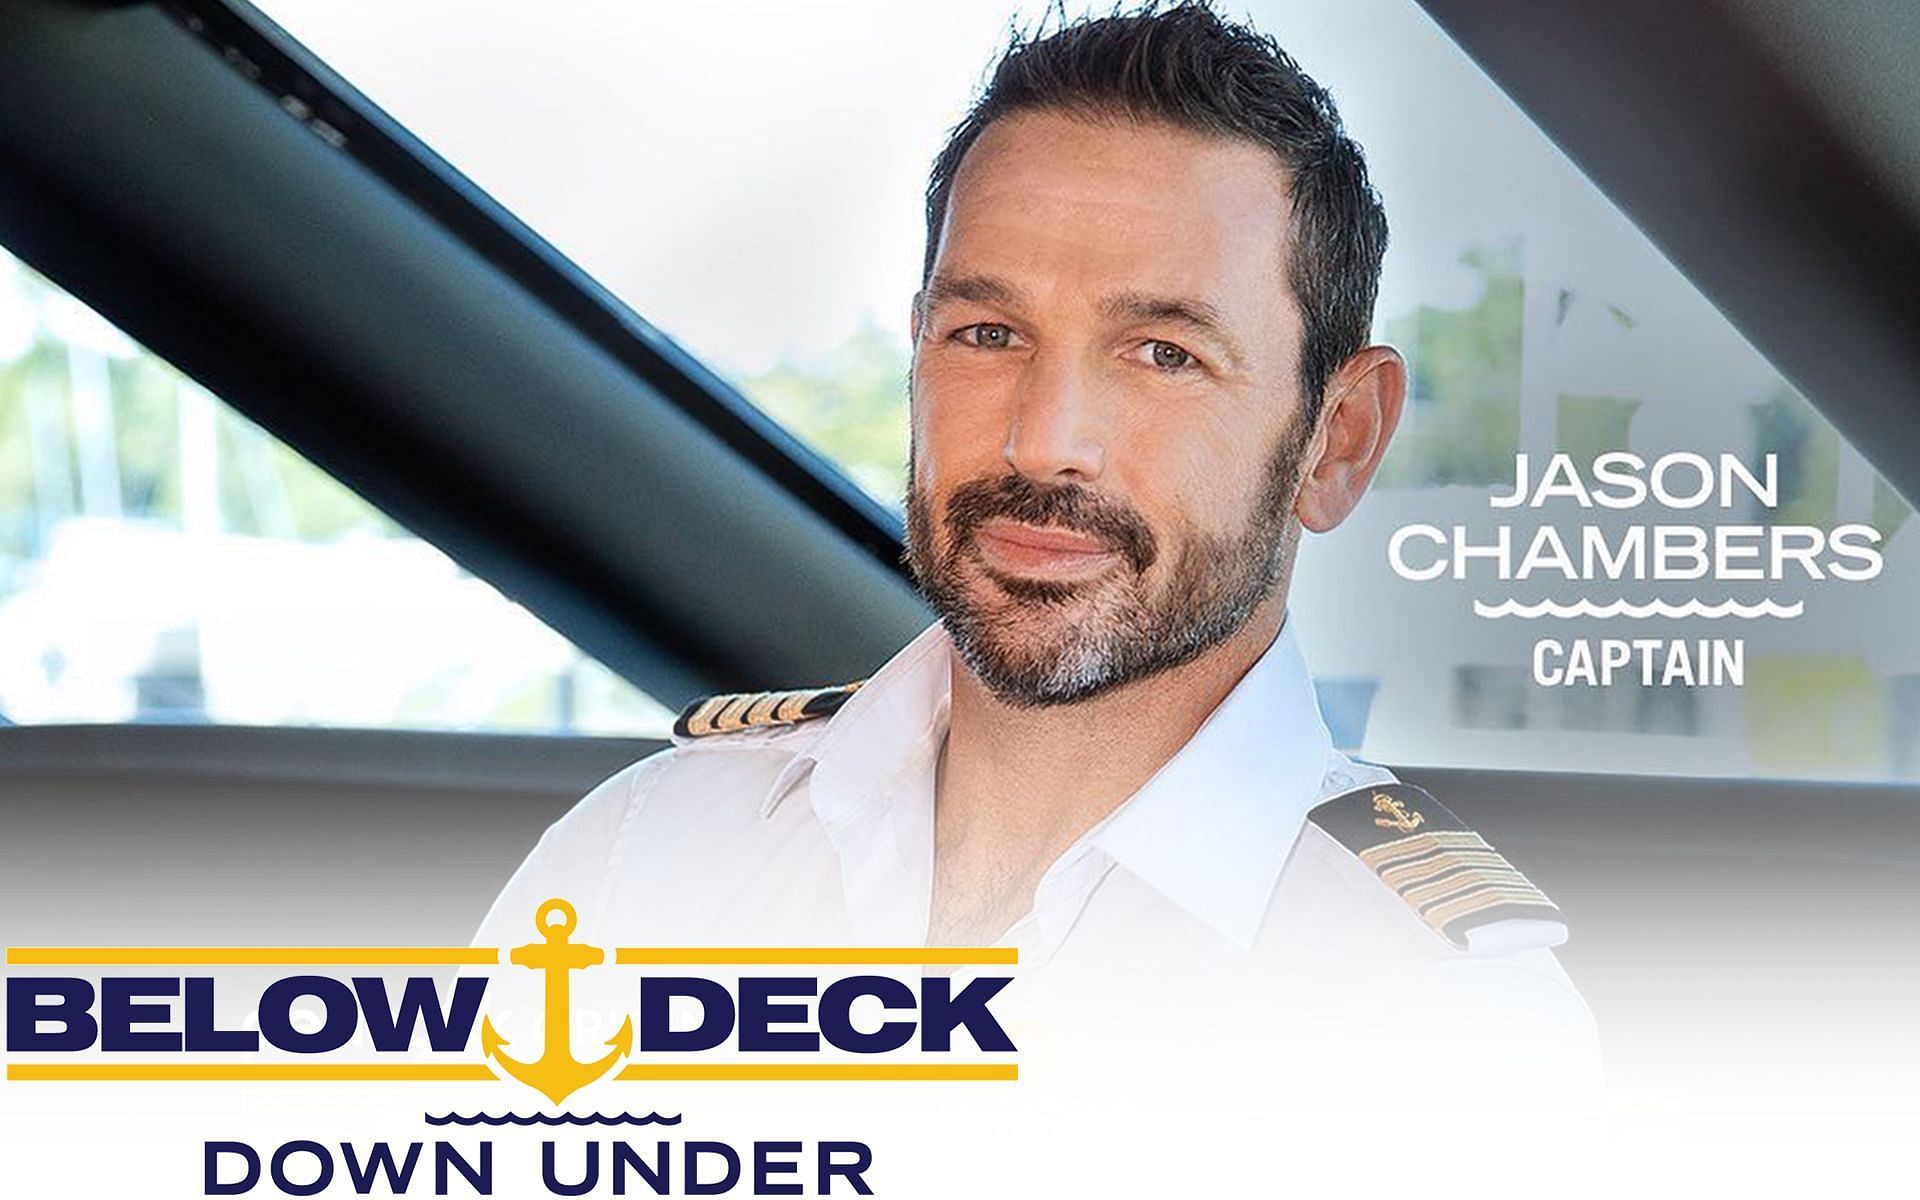 Captain Jason Chambers to star in Below Deck Down Under (Image via jason_chamberss/Instagram)